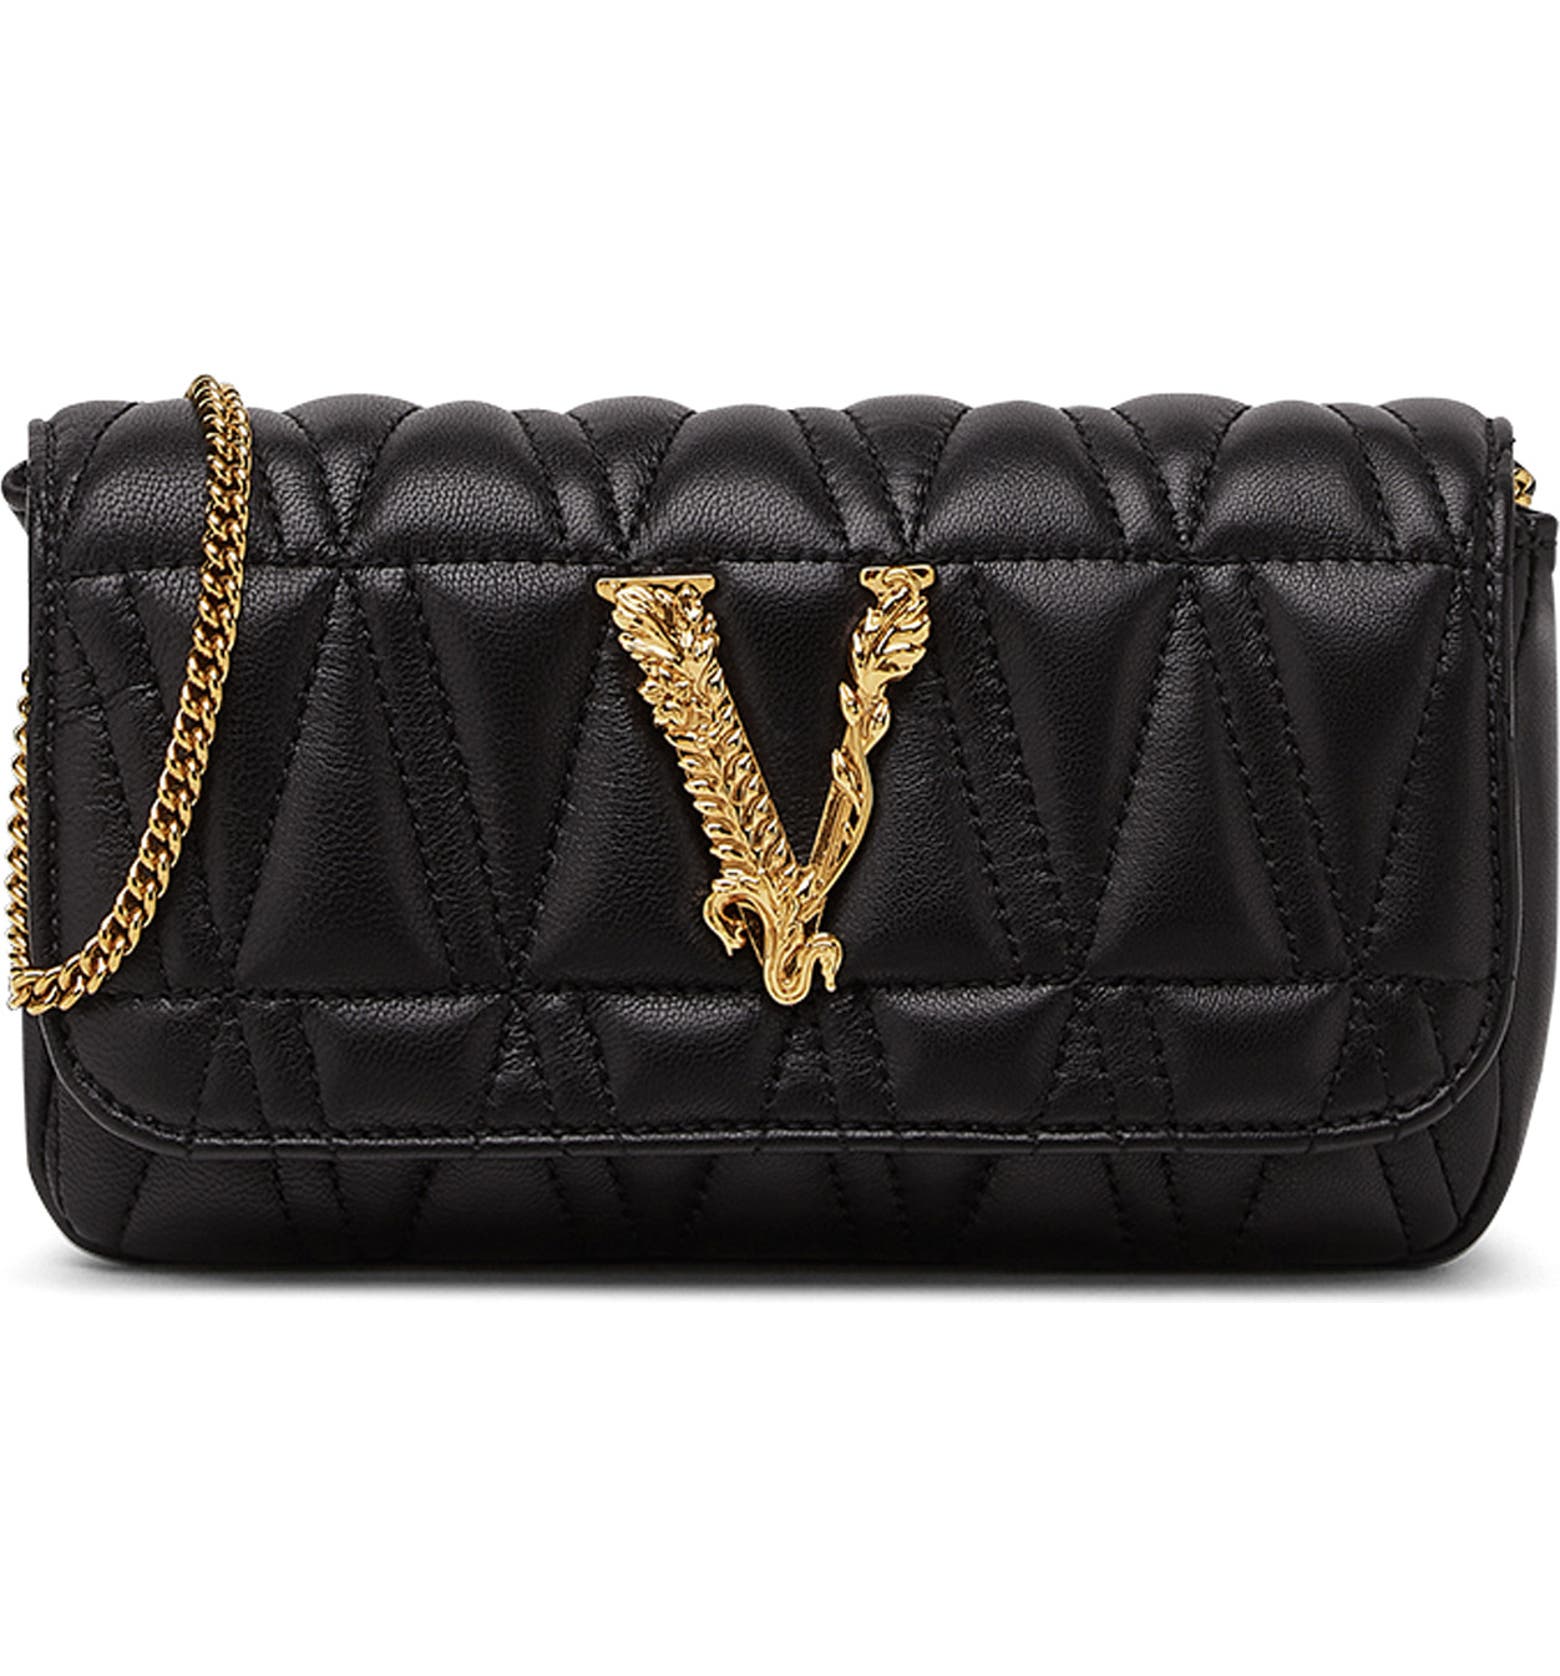 Black Versace Virtus bag